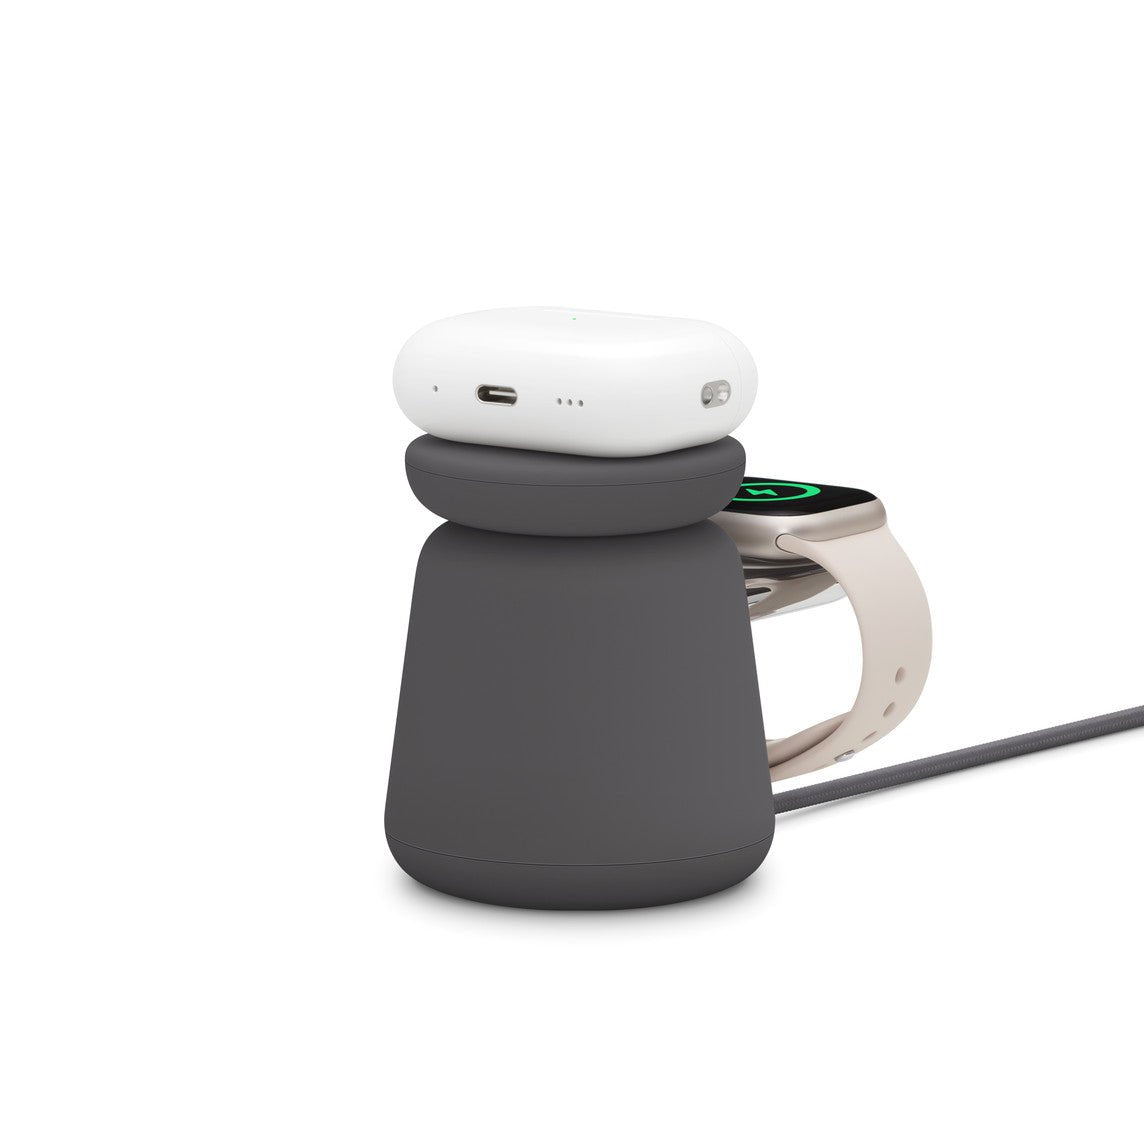 Belkin BoostCharge Pro 2-in-1 Wireless Charging Dock - iGadget Store